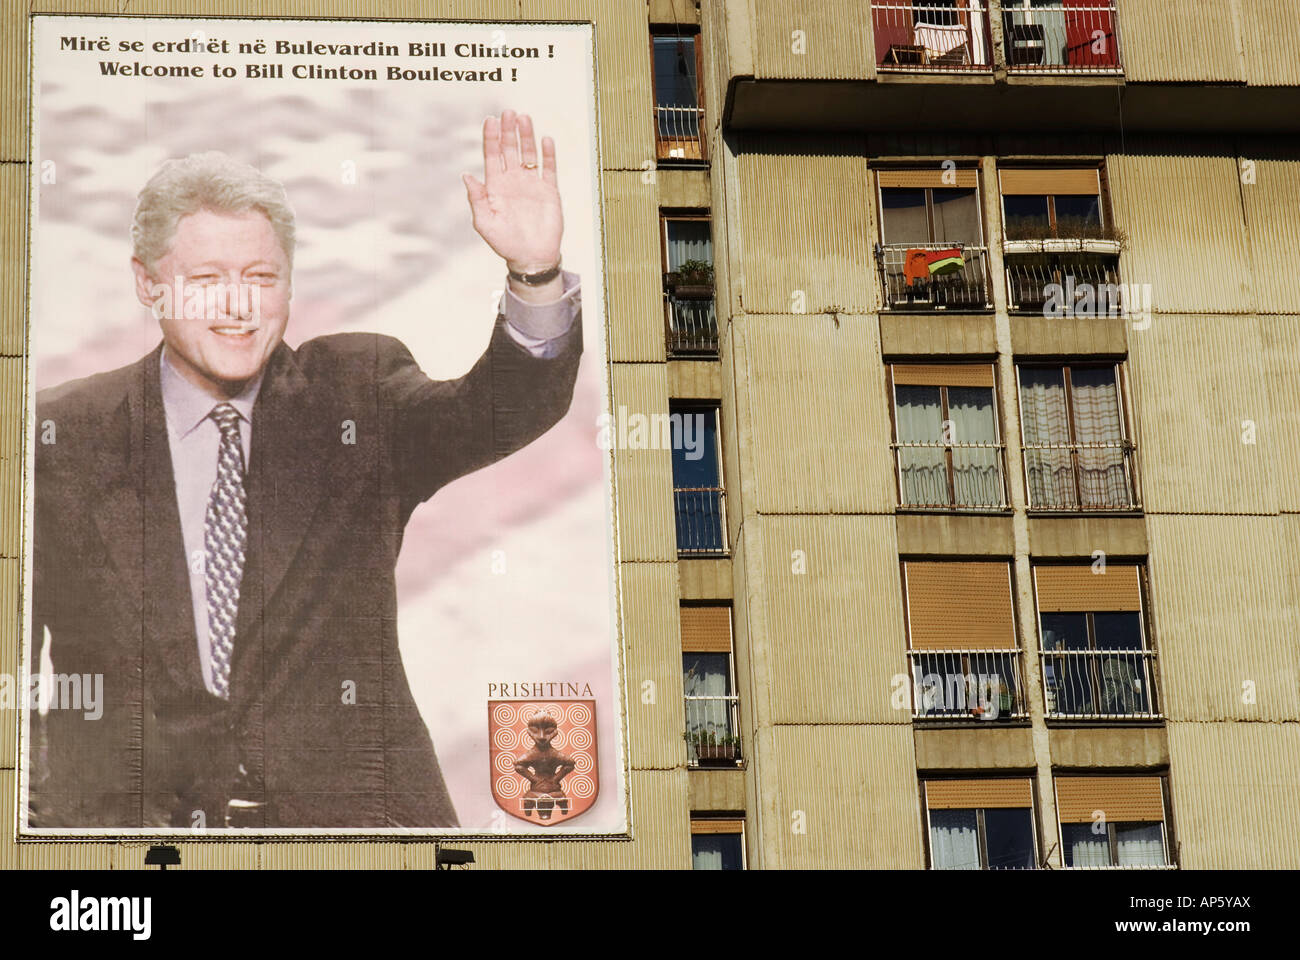 Bill Clinton Poster auf Bill Clinton Provinz Boulevard, Pristina, Kosovo, Serbien Stockfoto